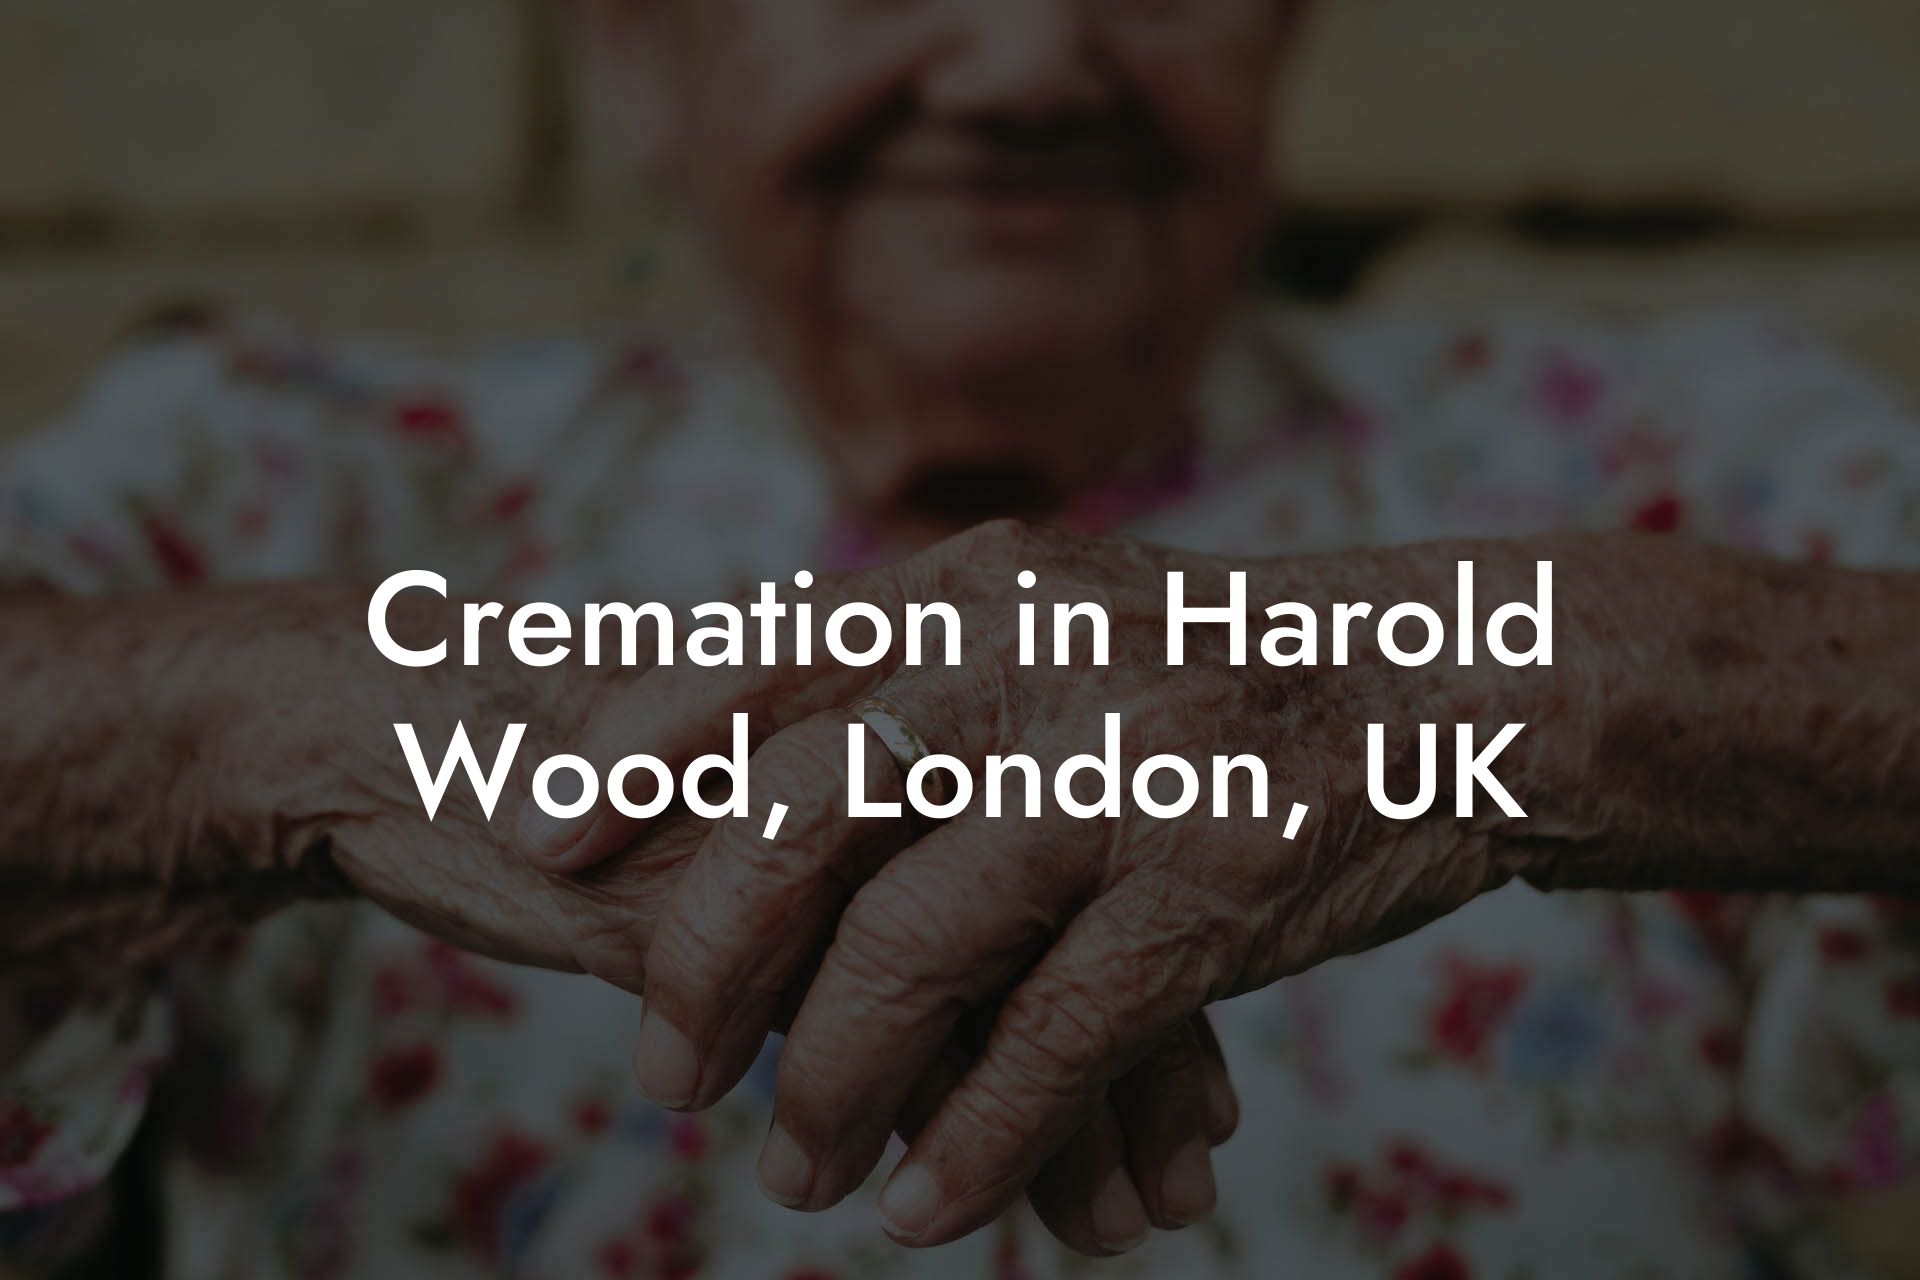 Cremation in Harold Wood, London, UK